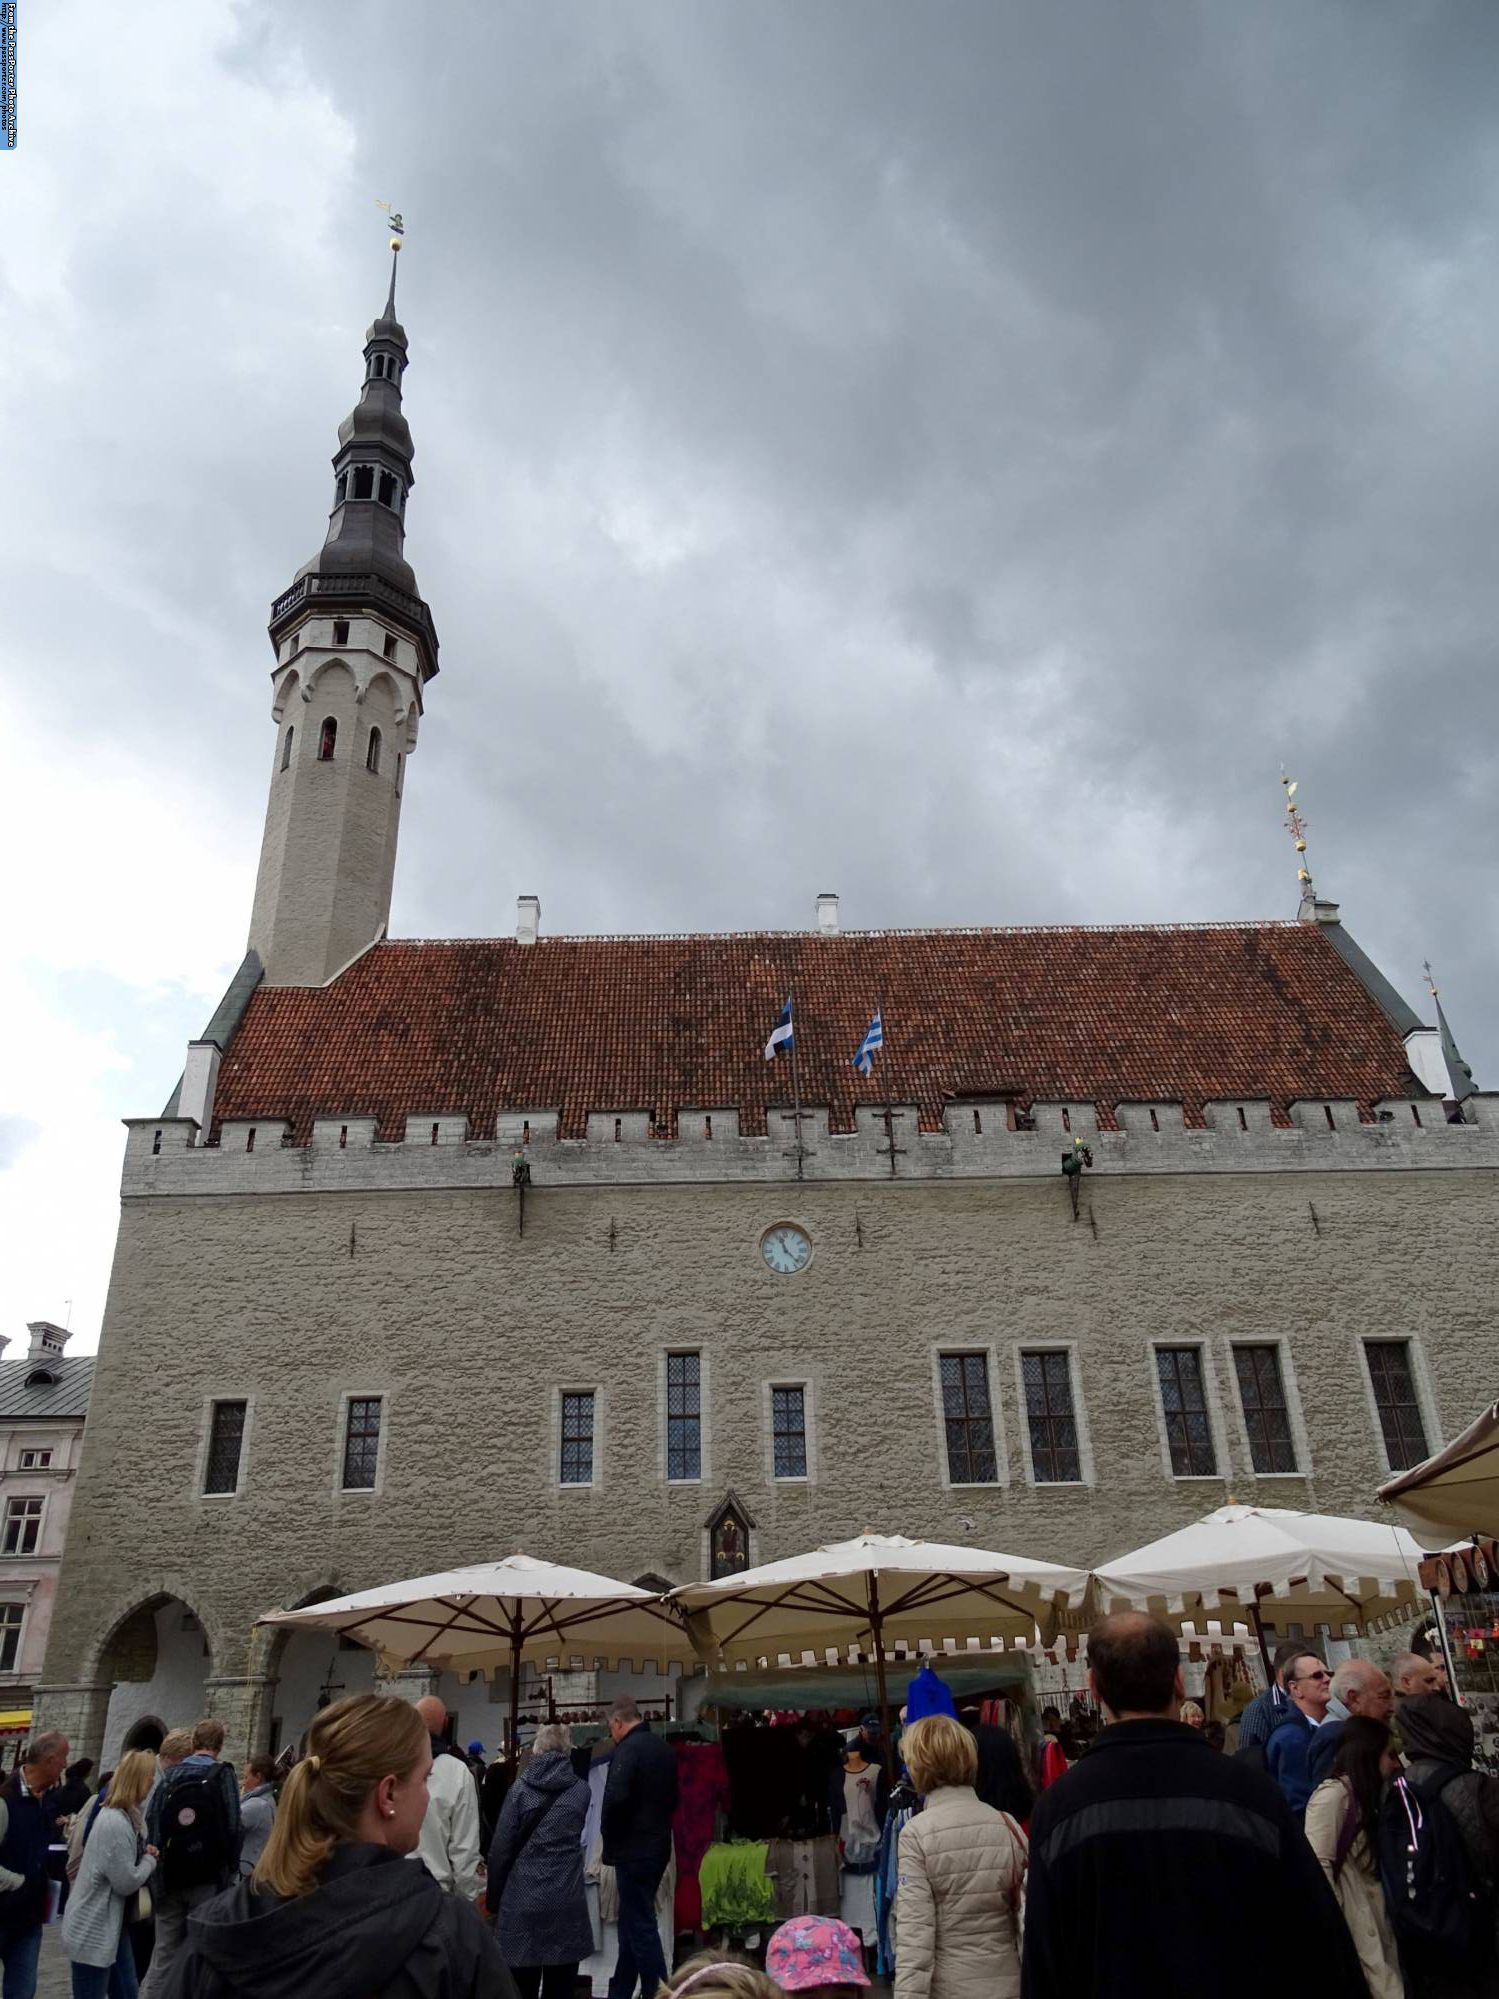 Explore the city of Tallinn, Estonia on your Disney Cruise | PassPorter.com